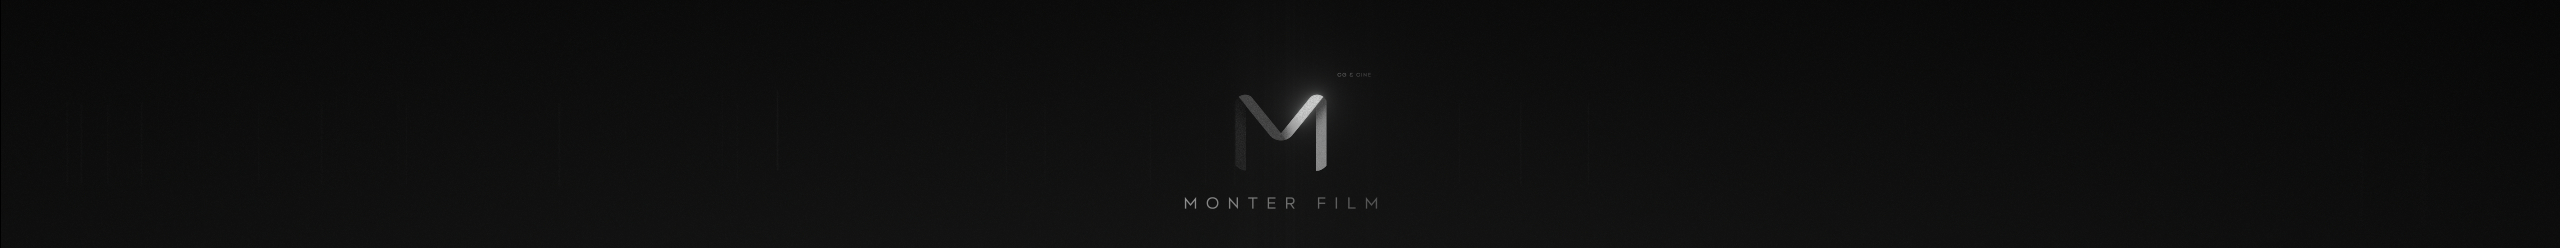 Monter Film's profile banner